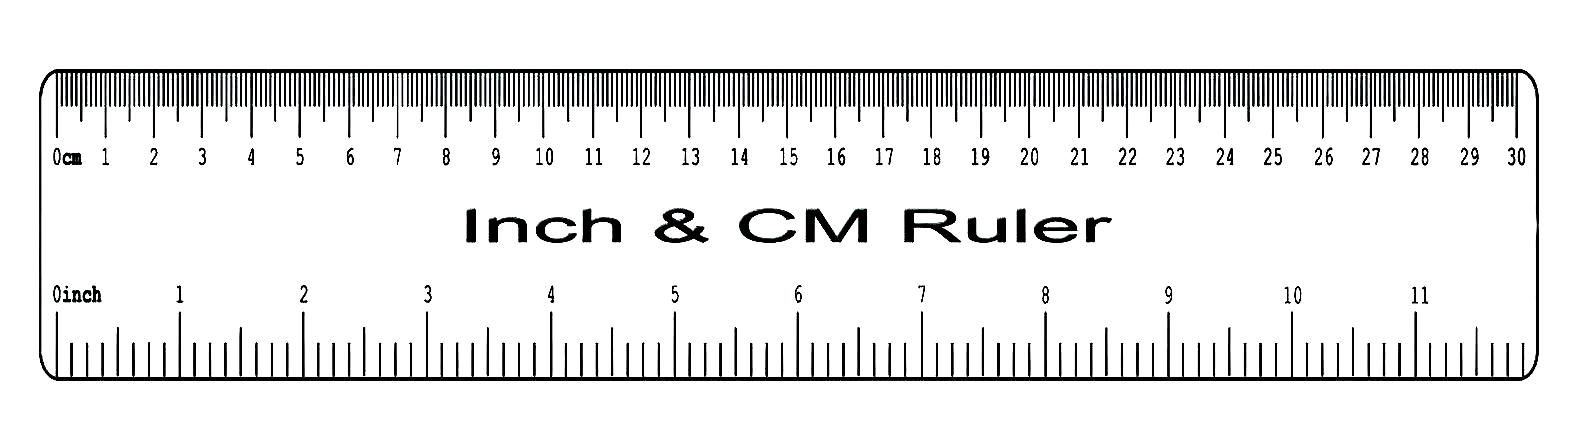 accurate millimeter ruler. 